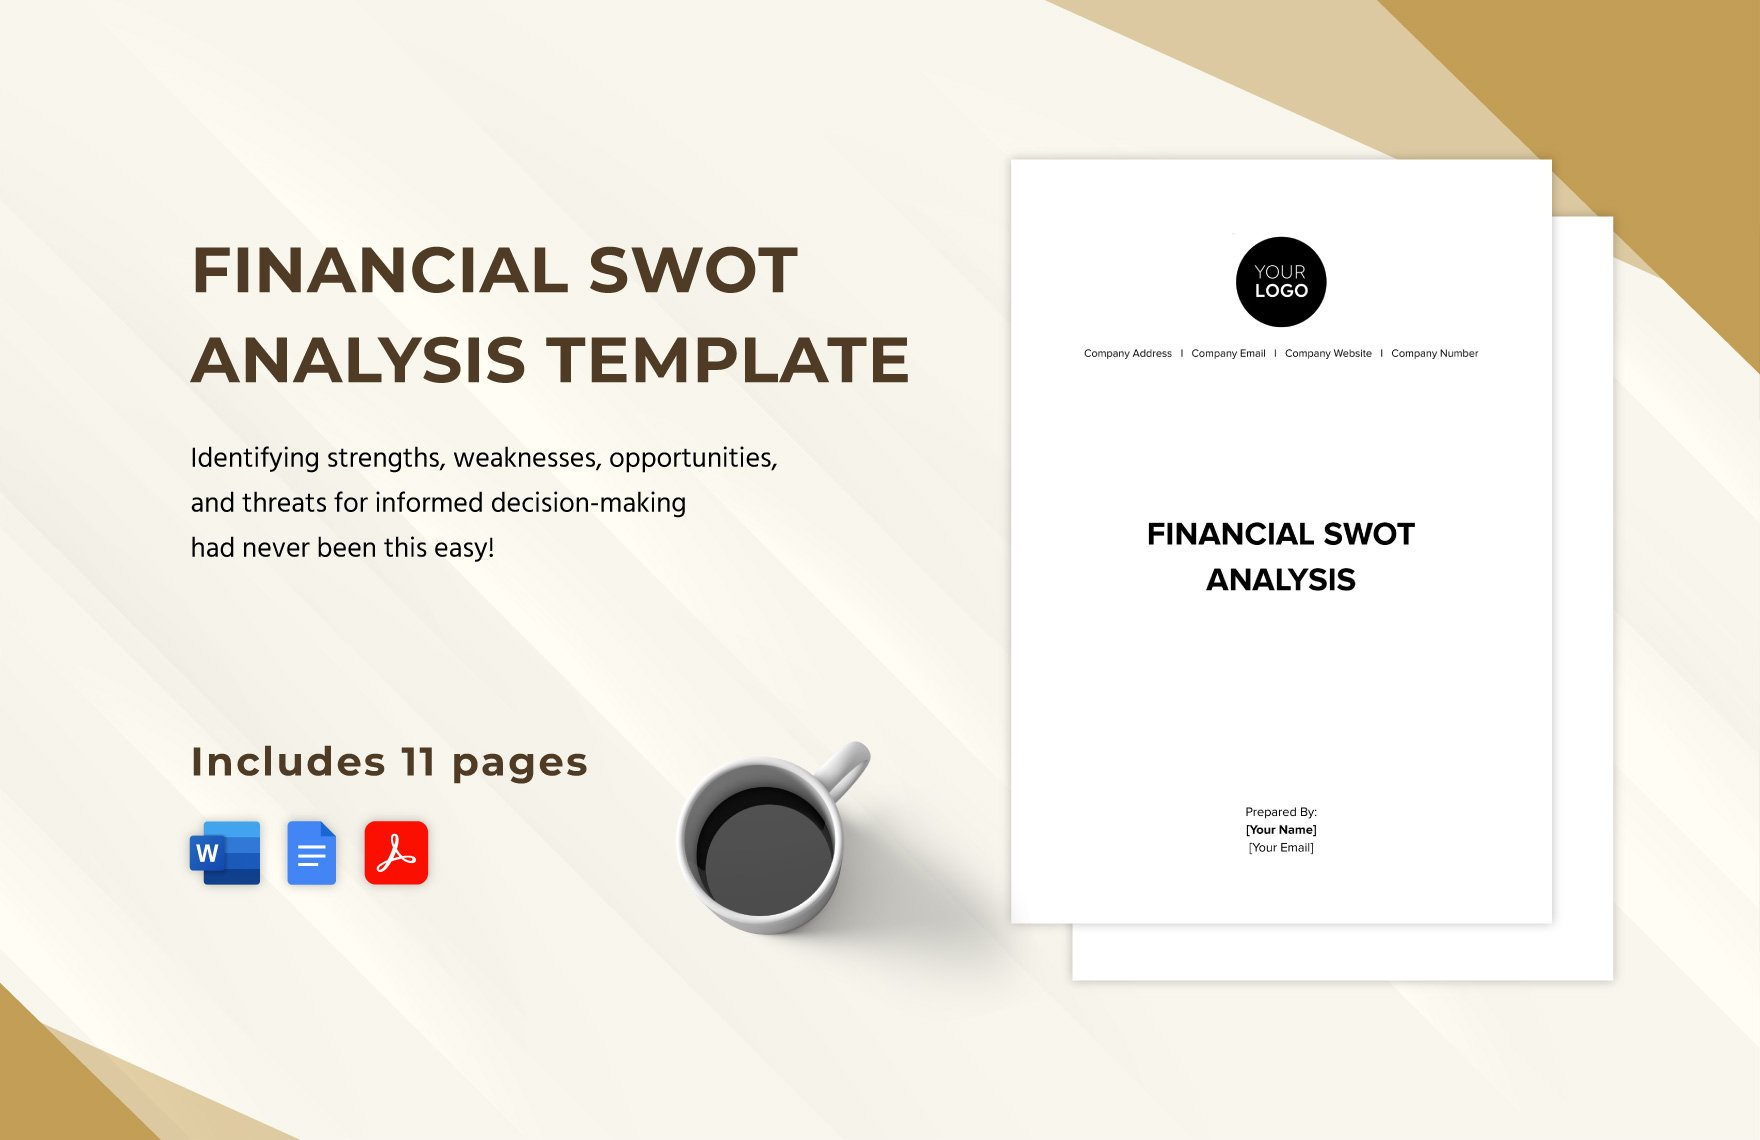 Financial SWOT Analysis Template